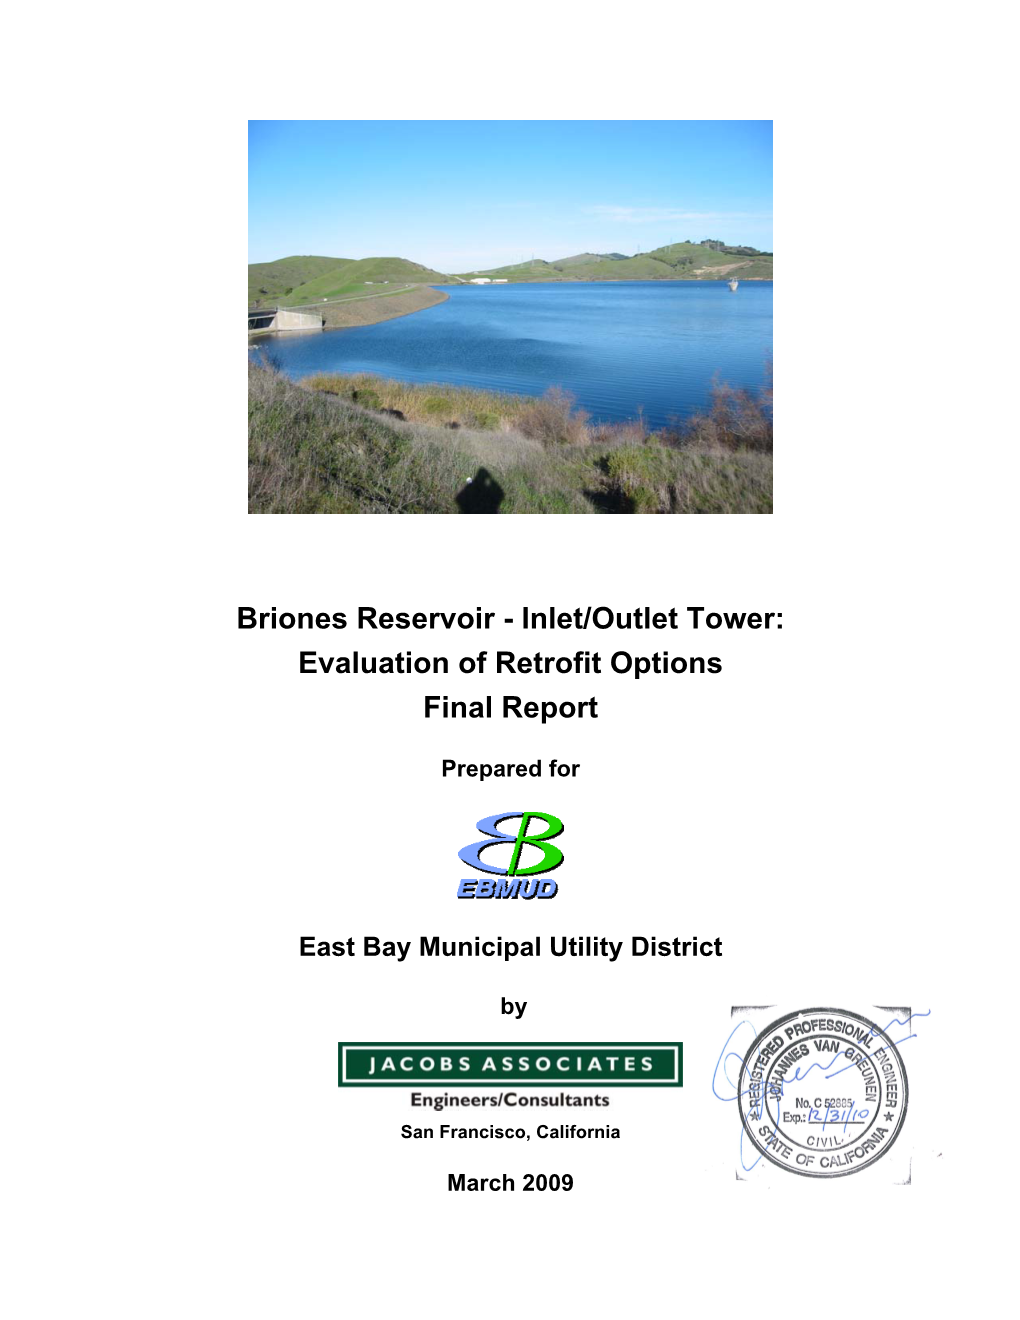 Briones Reservoir - Inlet/Outlet Tower: Evaluation of Retrofit Options Final Report